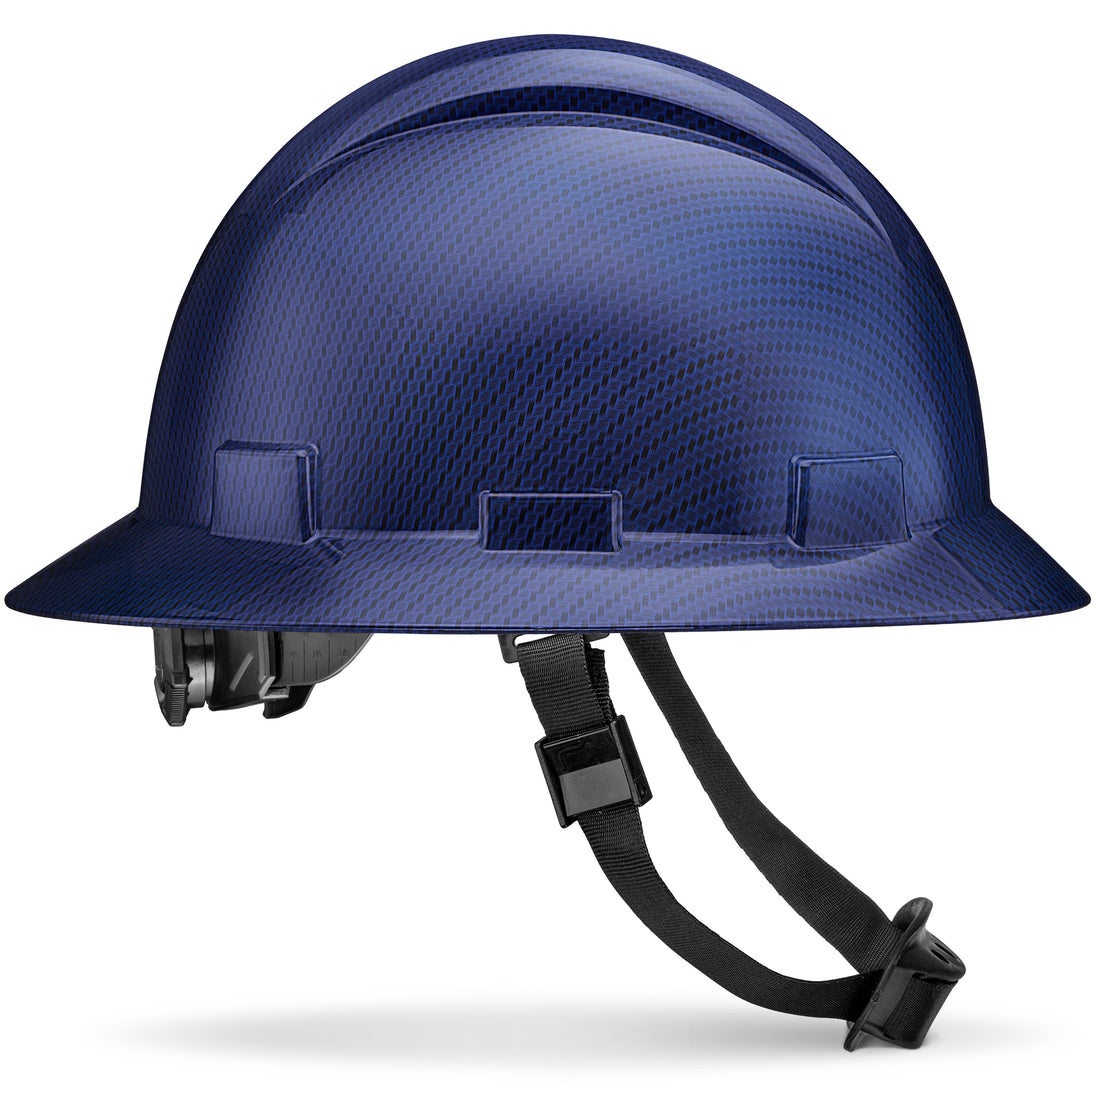 Full Brim Beguiled Blue Carbon Fiber Design Gloss Finish Non-Vented Hard Hat